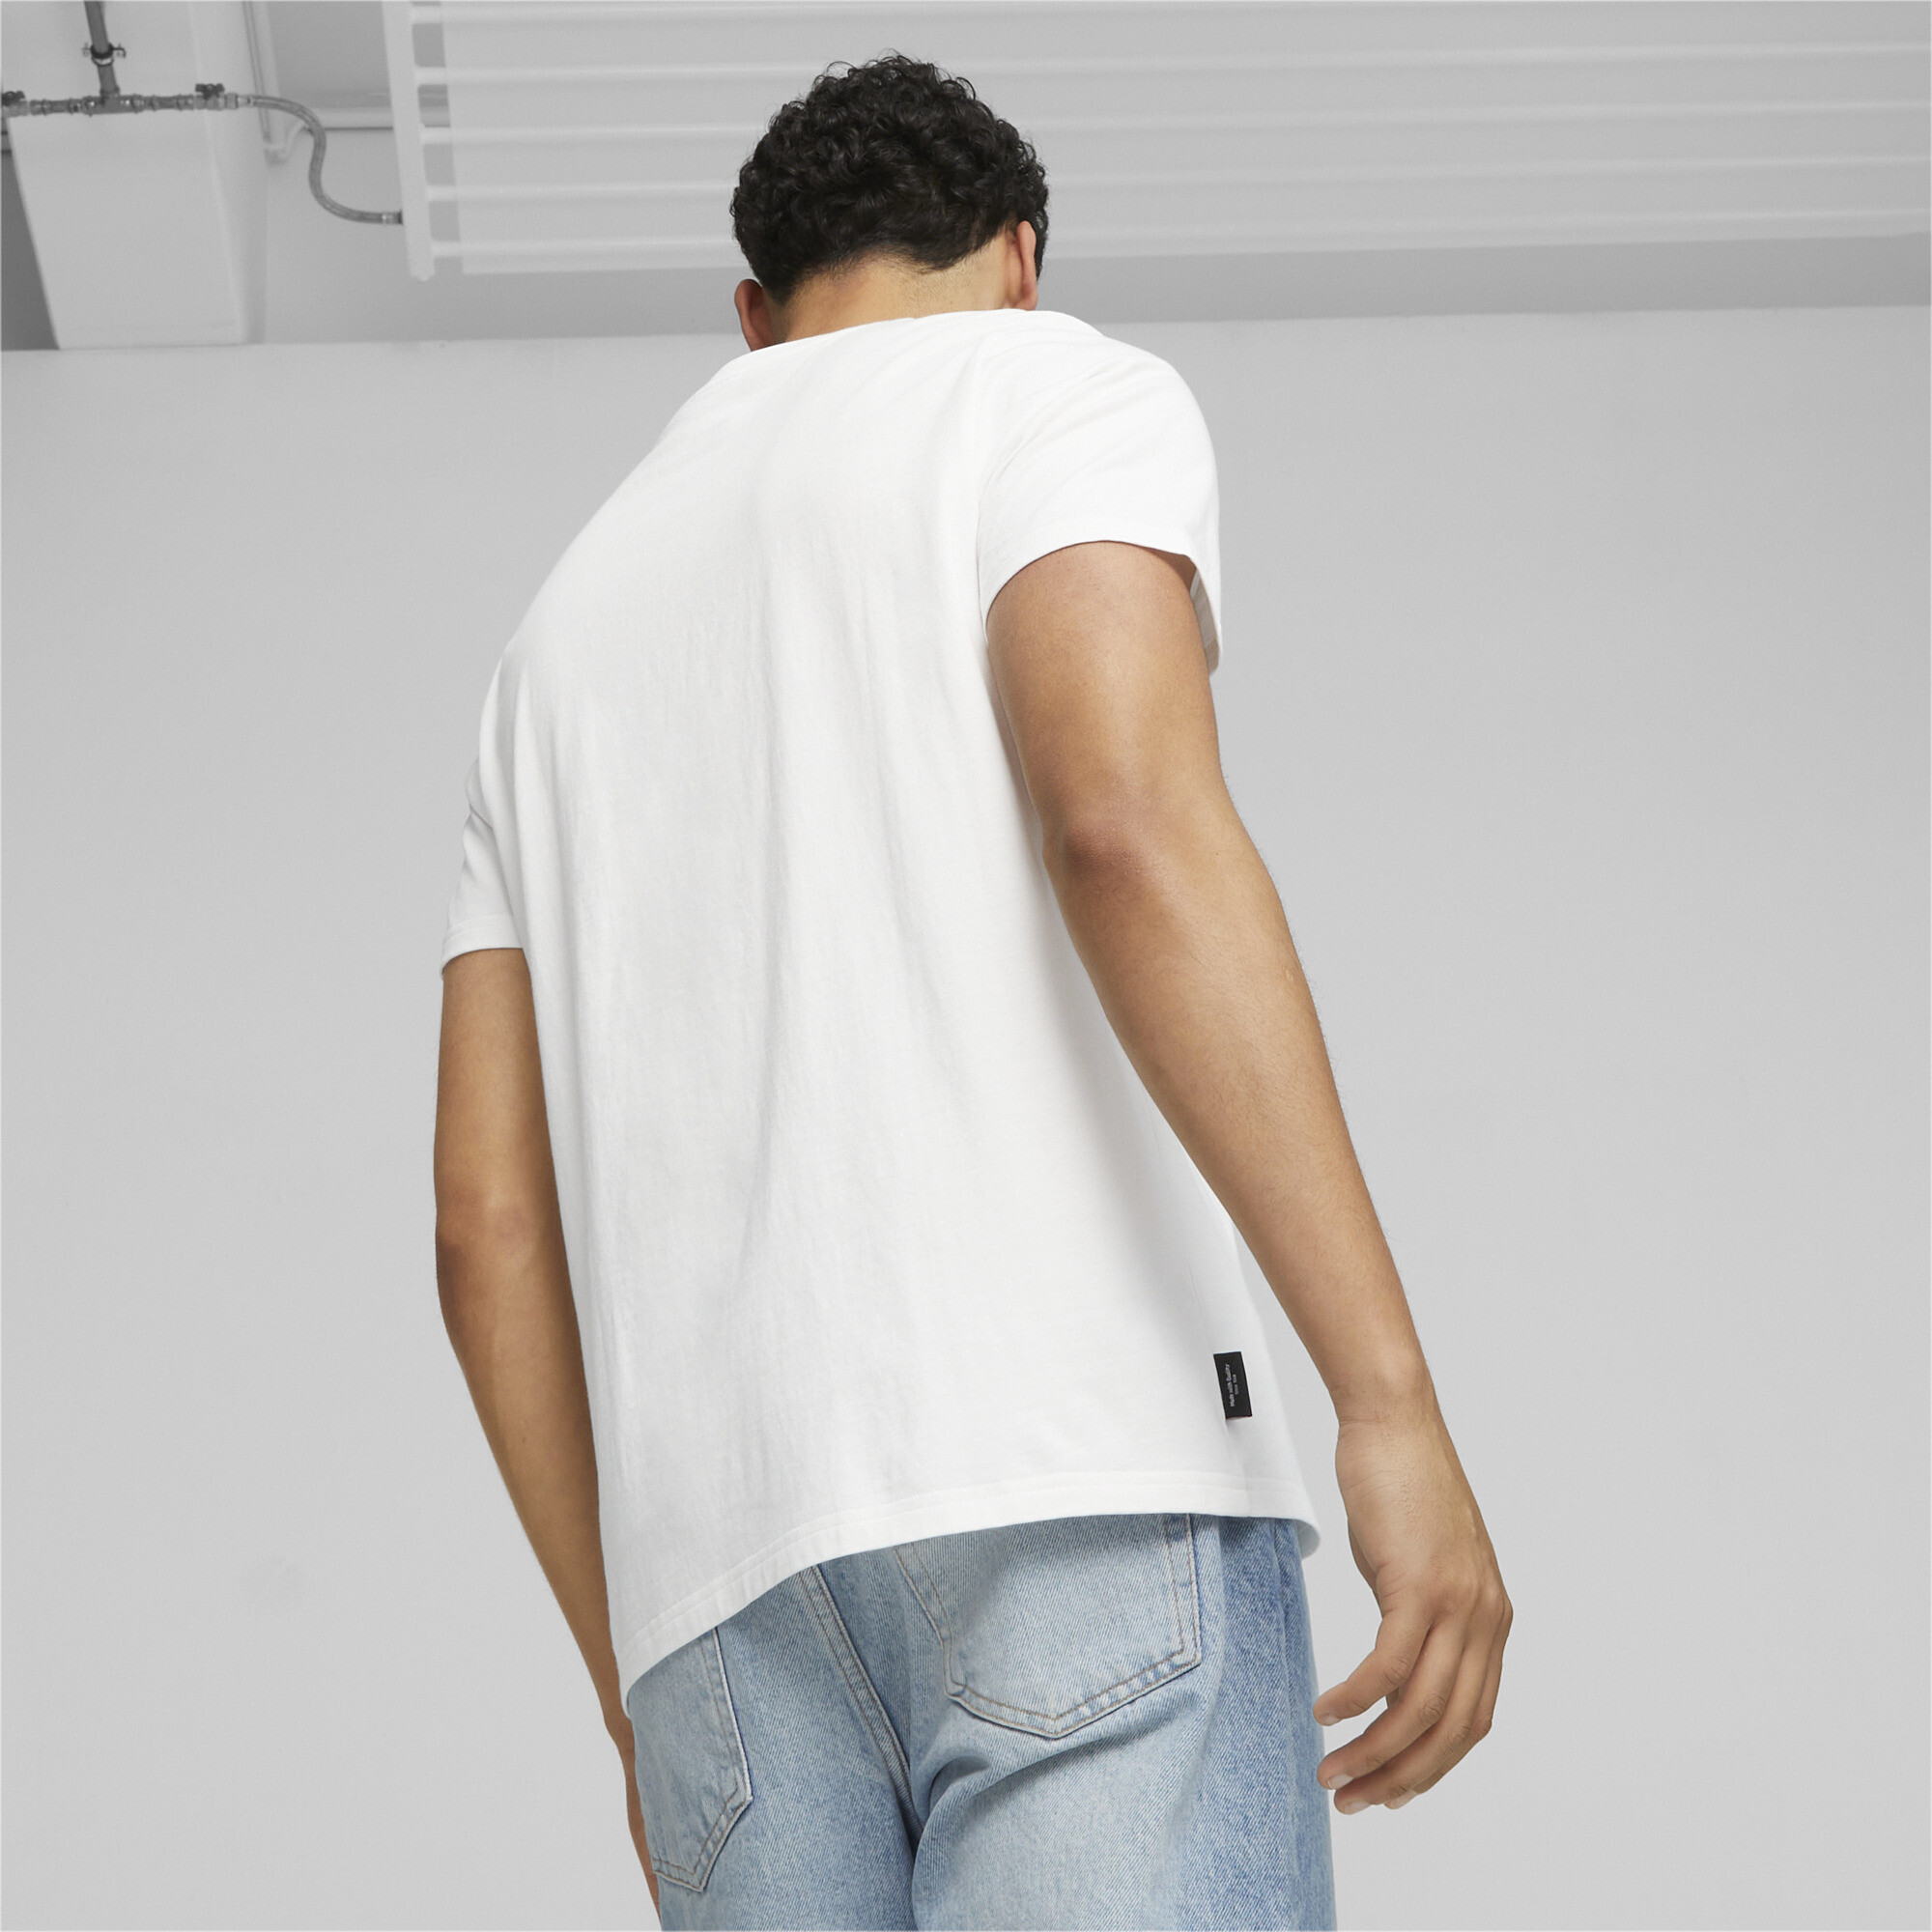 Men's CafÃ© PUMA Graphic T-Shirt In White, Size XS